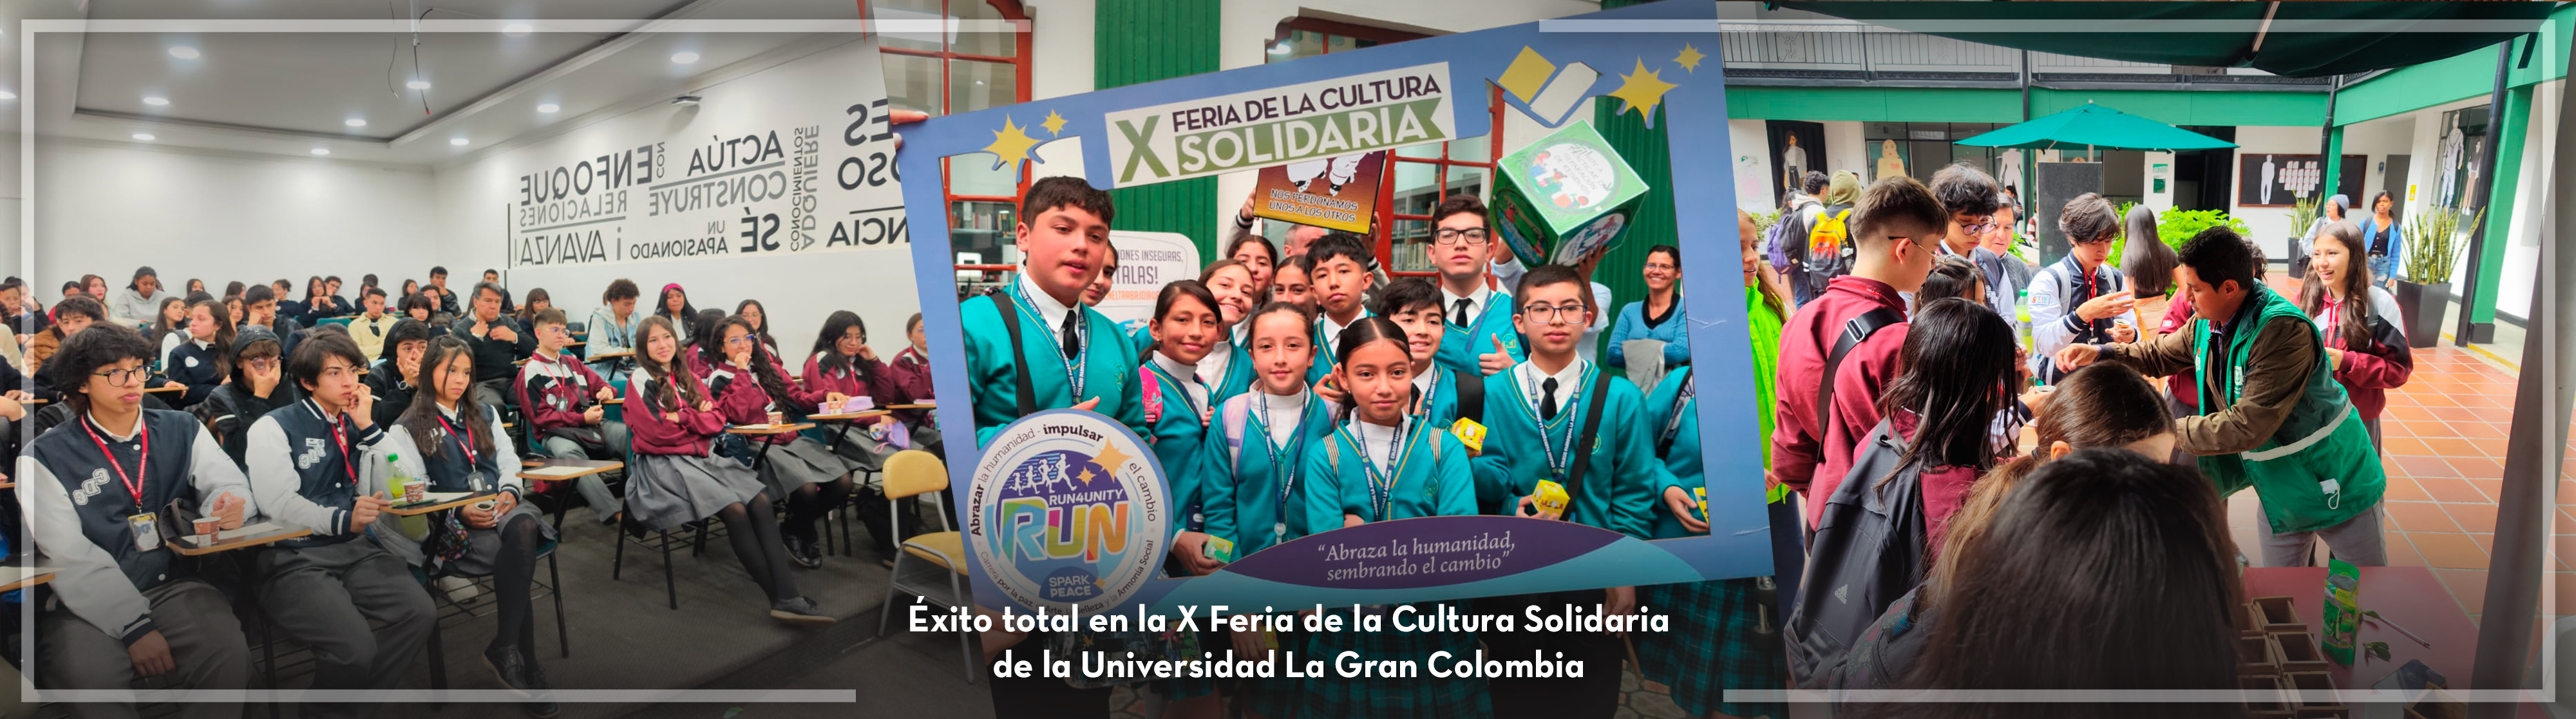 Éxito total en la X Feria de la Cultura Solidaria de la Universidad La Gran Colombia